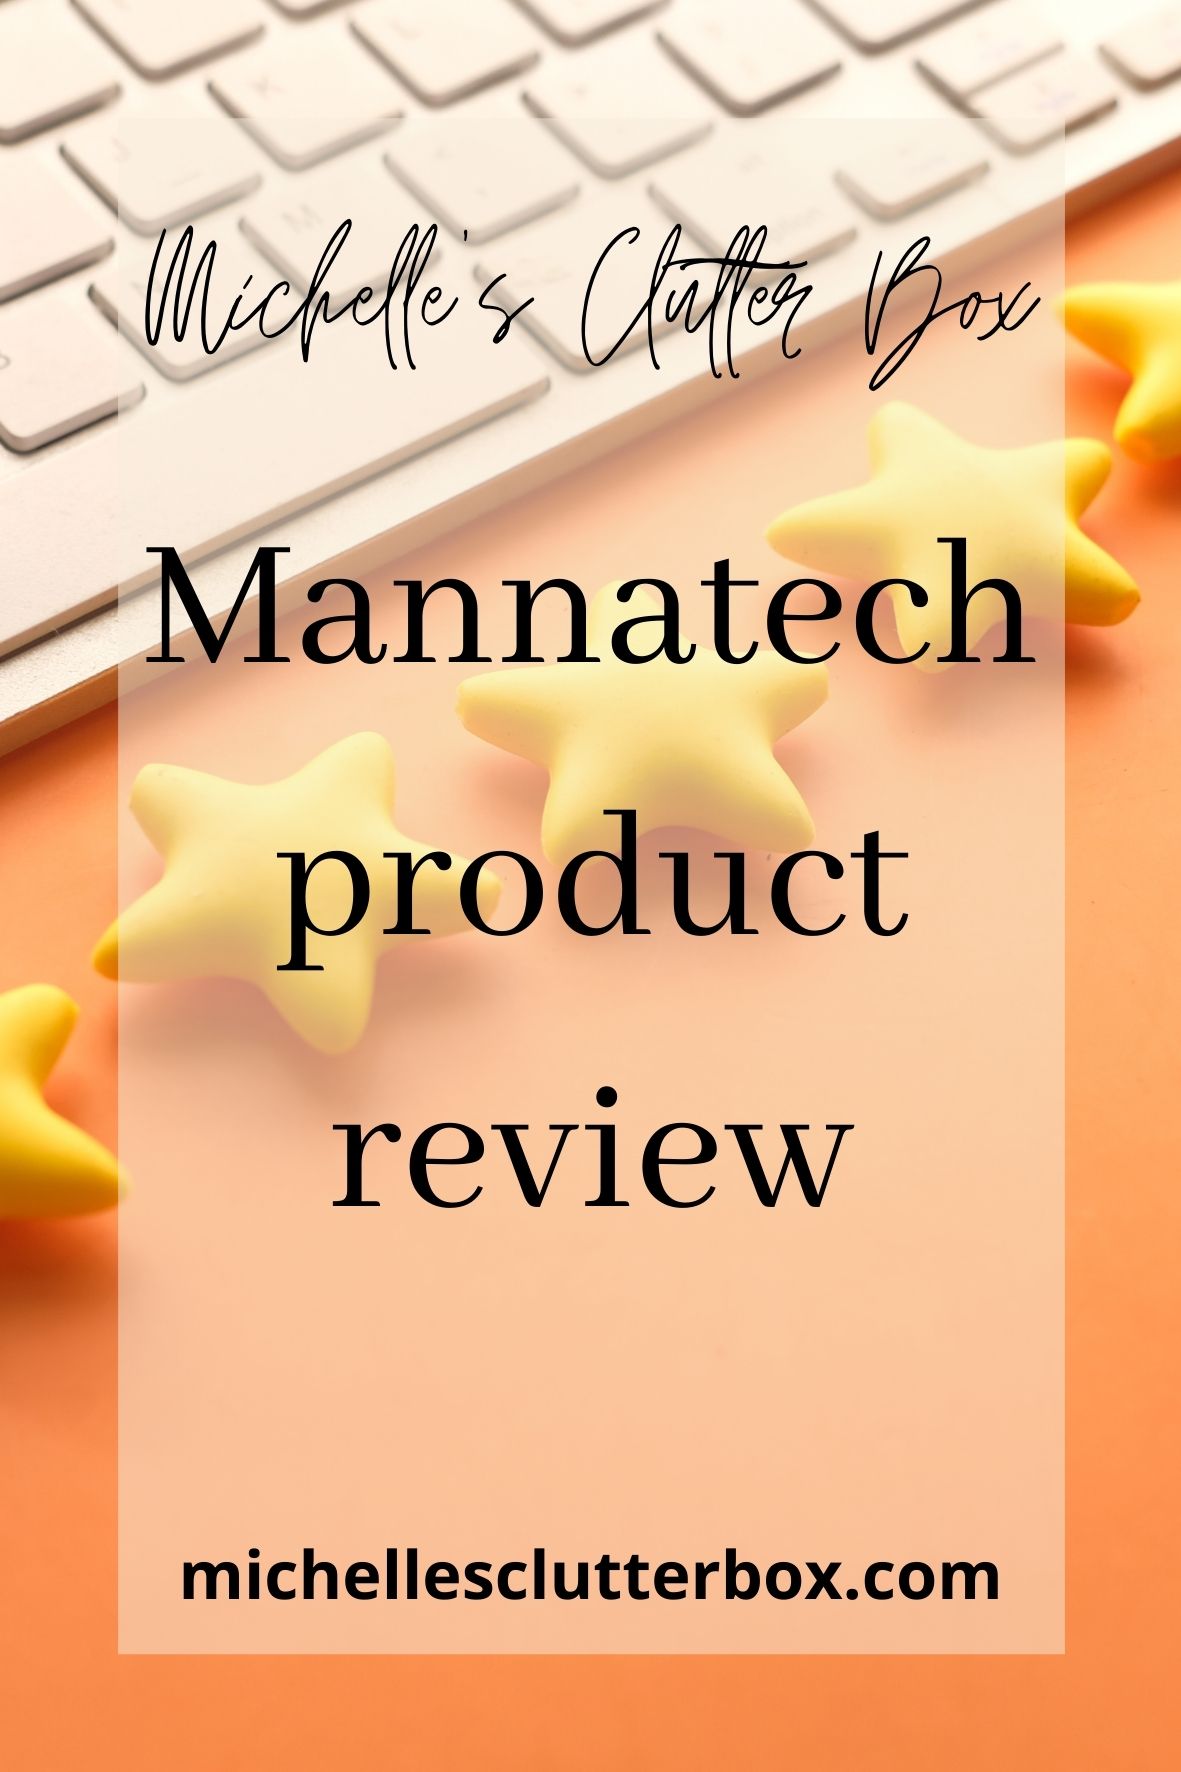 Mannatech product review